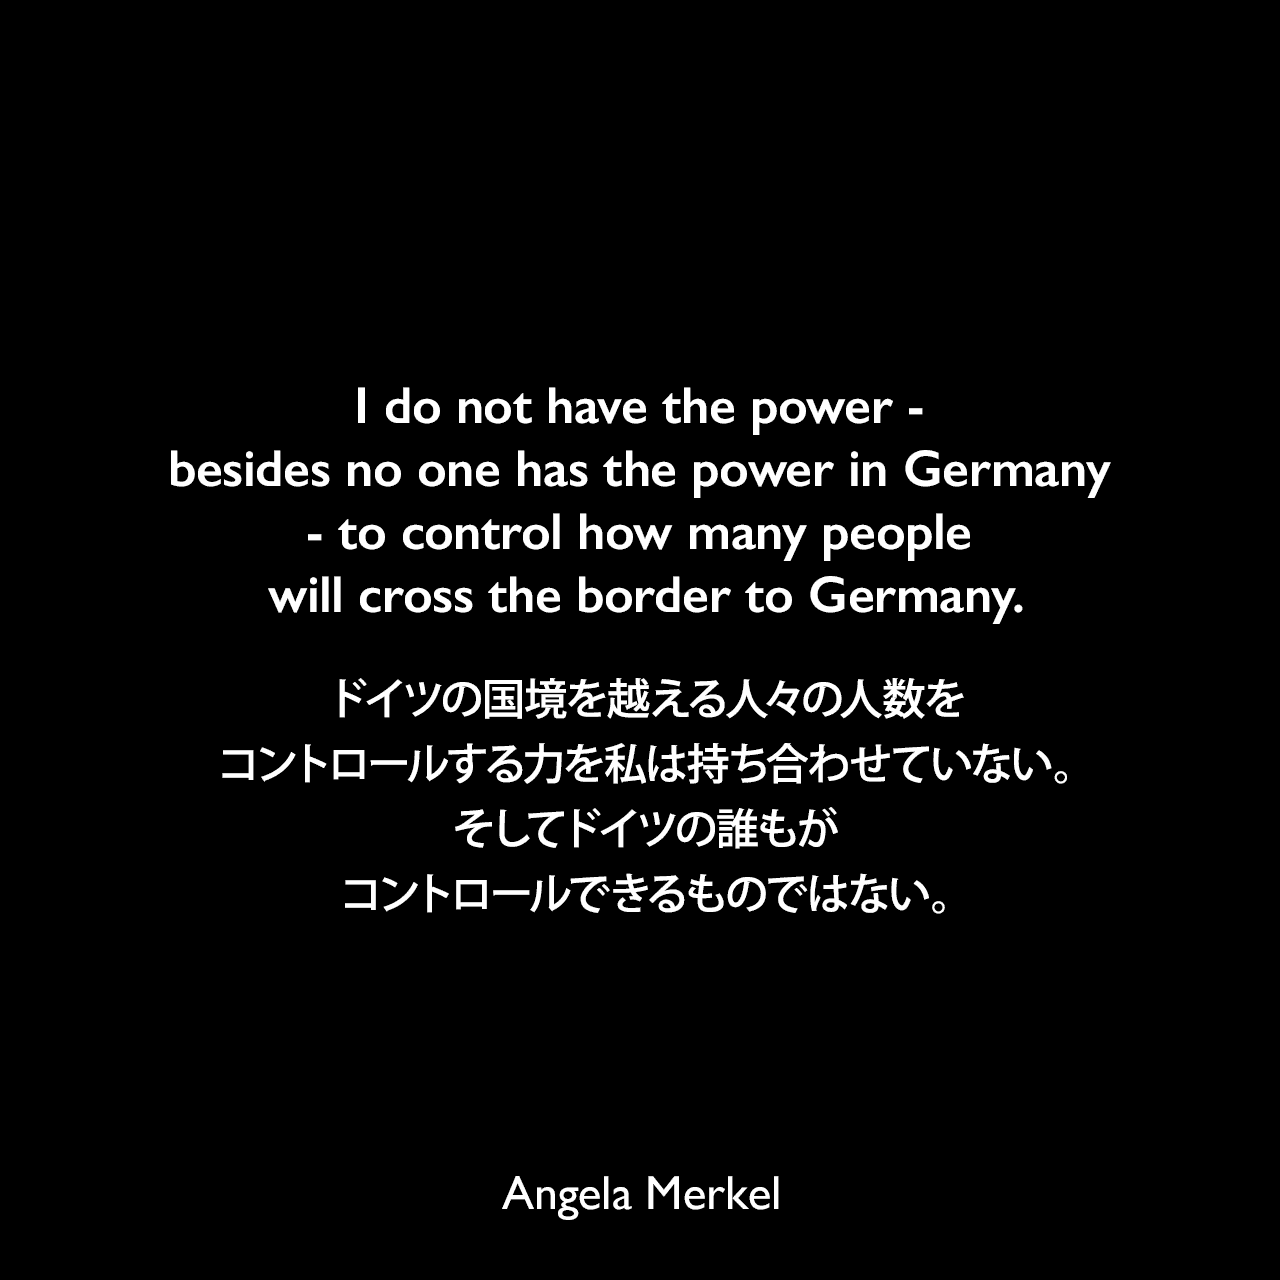 I do not have the power - besides no one has the power in Germany - to control how many people will cross the border to Germany.ドイツの国境を越える人々の人数をコントロールする力を私は持ち合わせていない。そしてドイツの誰もがコントロールできるものではない。- 2015年10月7日、ドイツのトークショーでのインタビューよりAngela Merkel